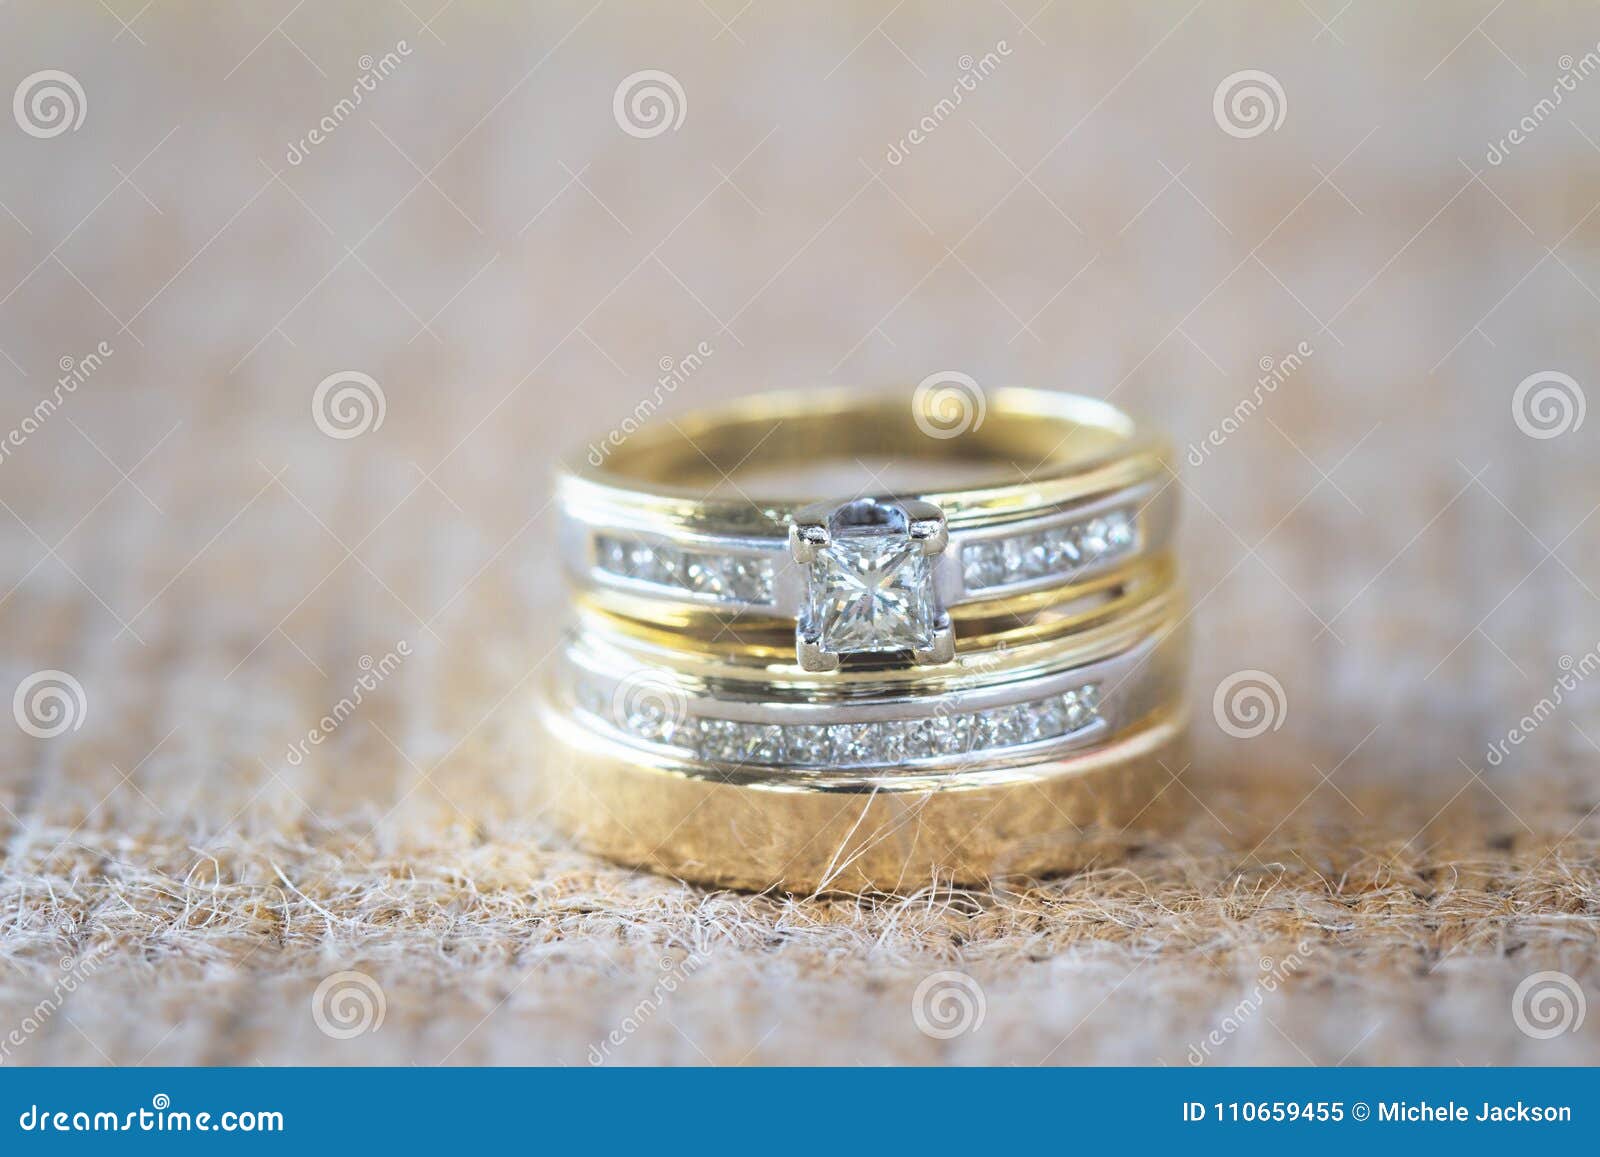 Bride and Groom Wedding Ring Set Stock Image - Image of matching